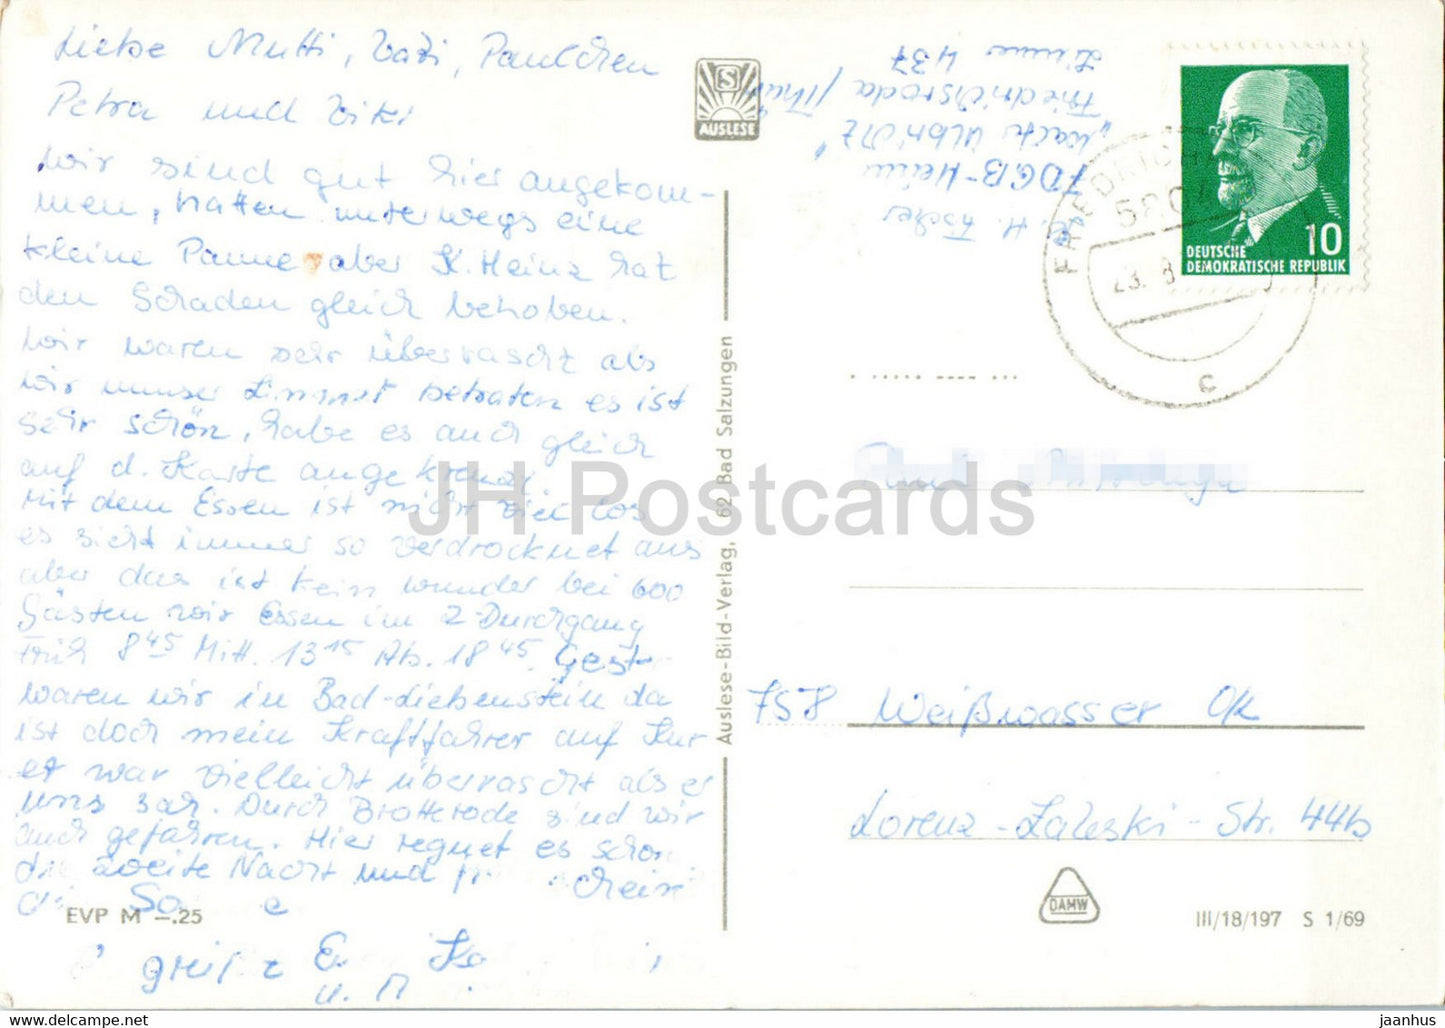 Friedrichroda - Thur - FDGB Heim Hermann Danz - Walter Ulbricht - Marienquelle - old postcard - Germany DDR - used